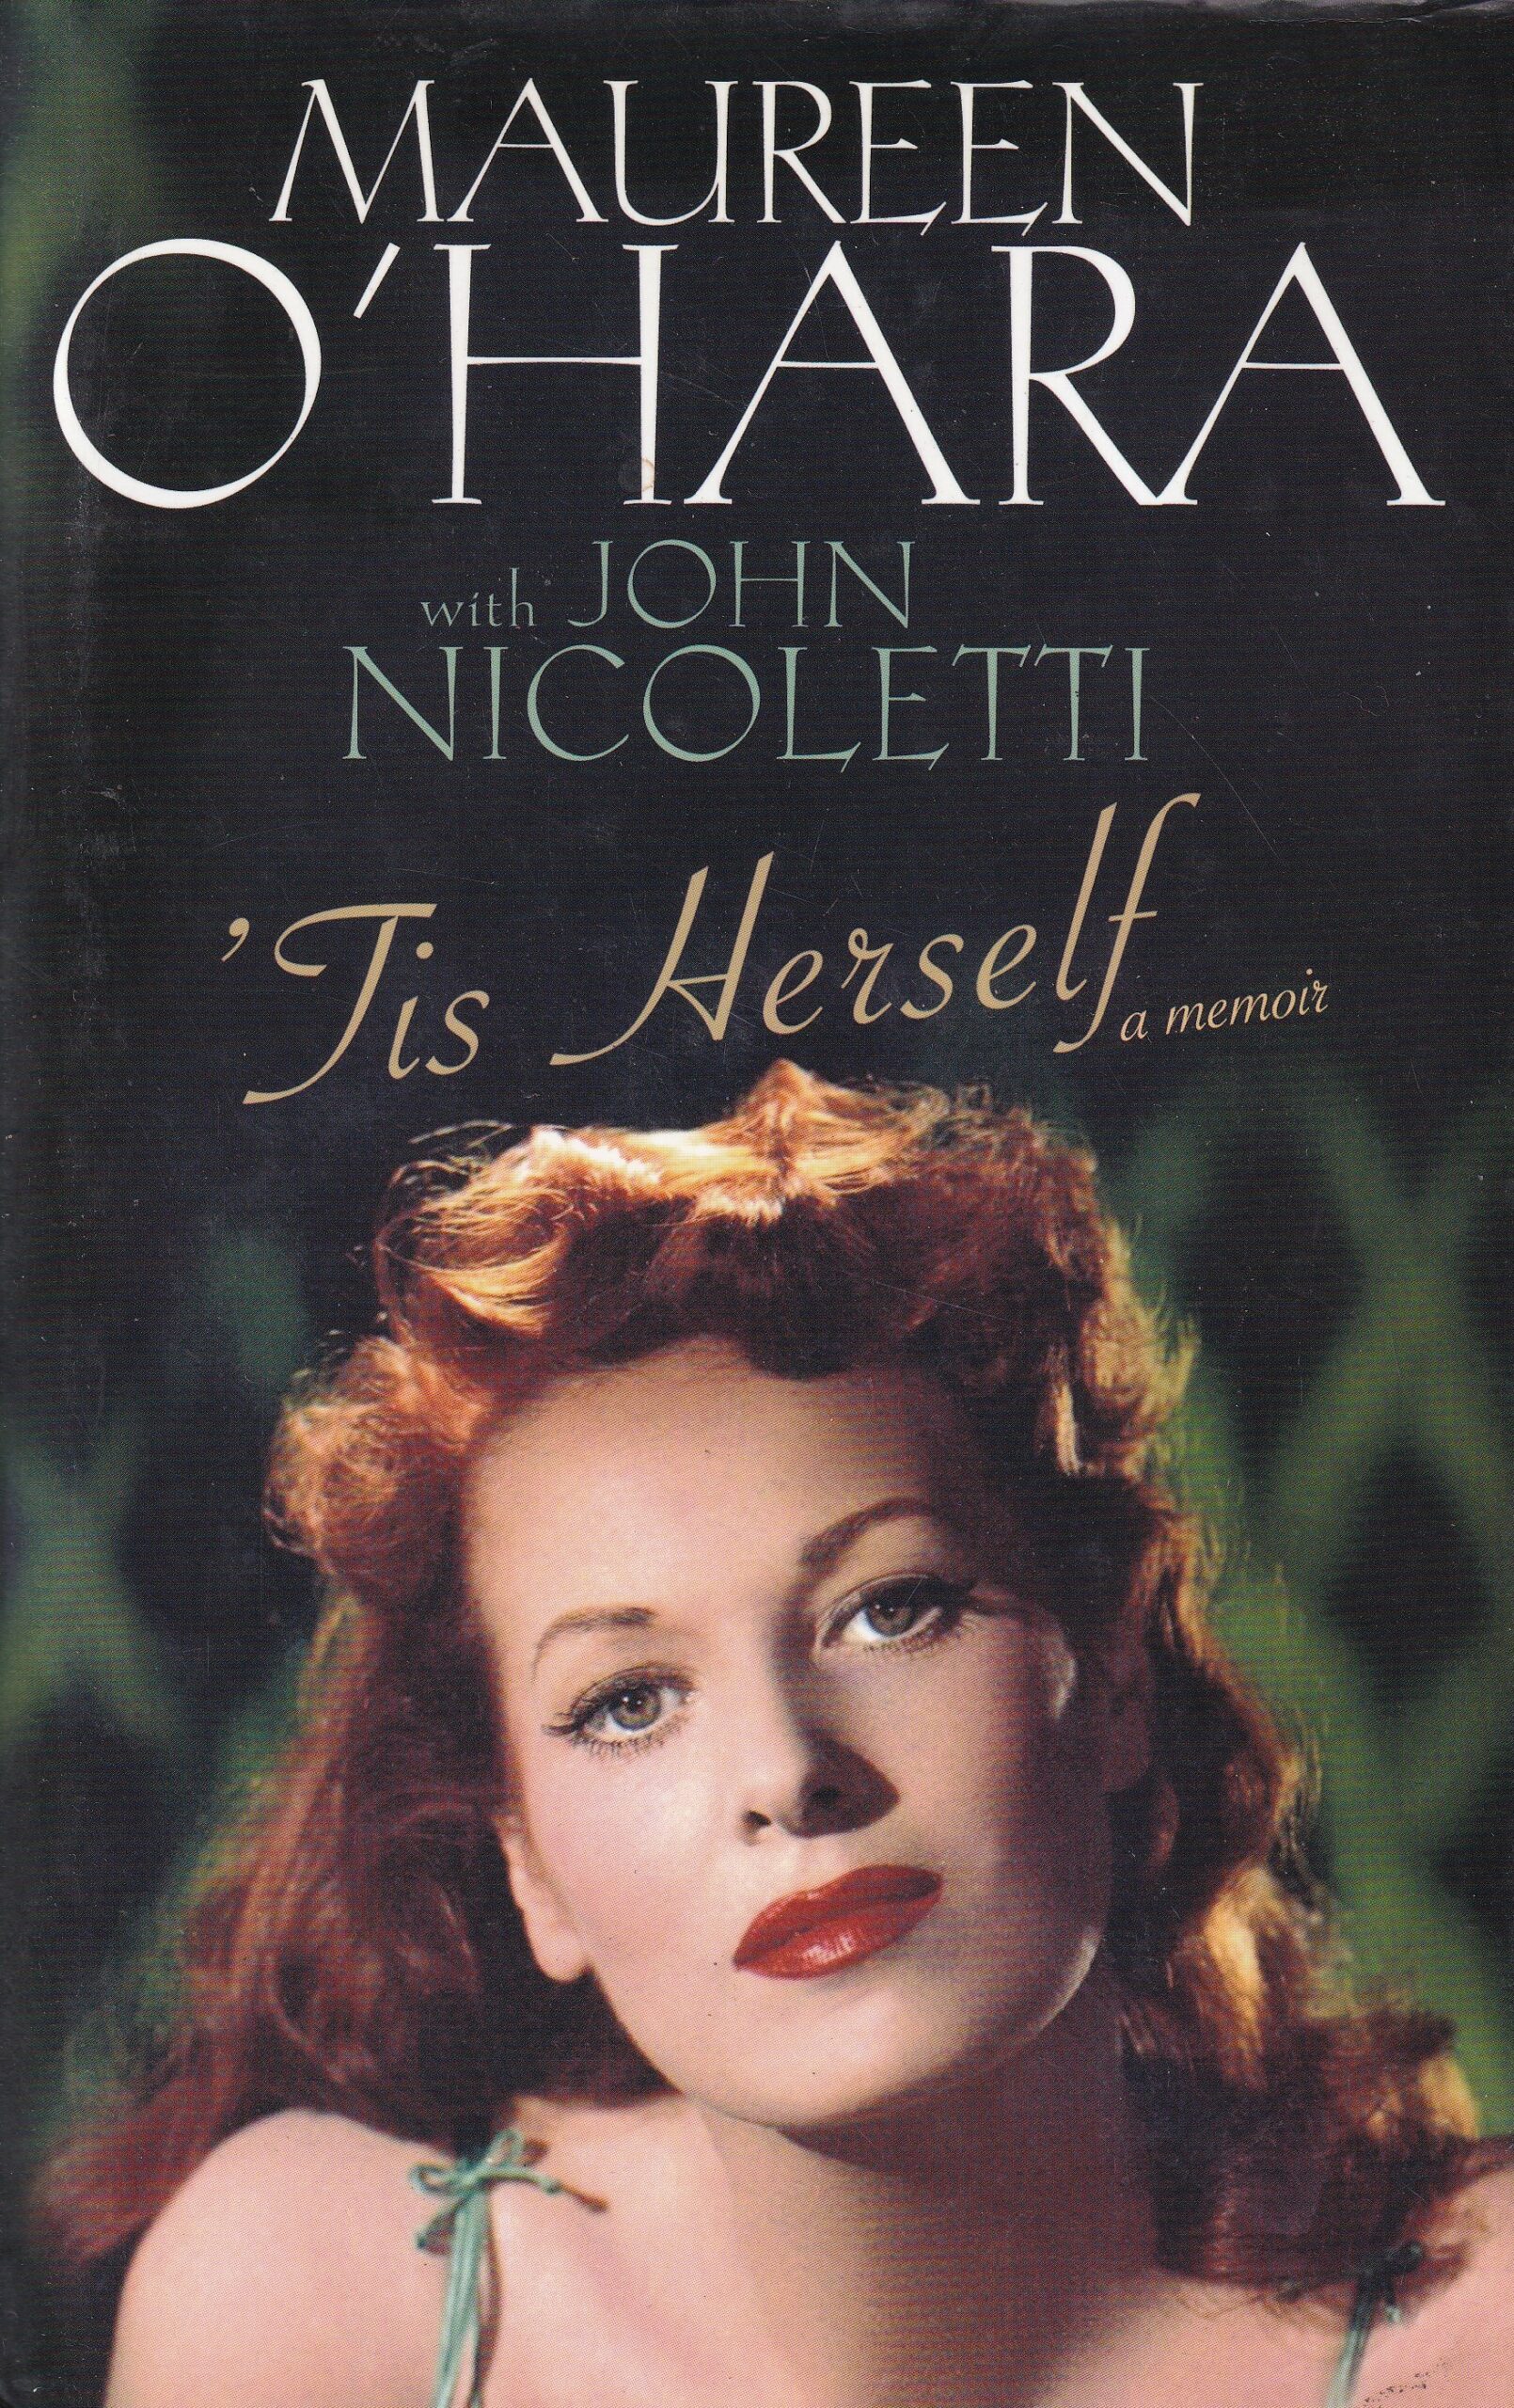 ‘Tis Herself: A Memoir by Maureen O'Hara with John Nicoletti